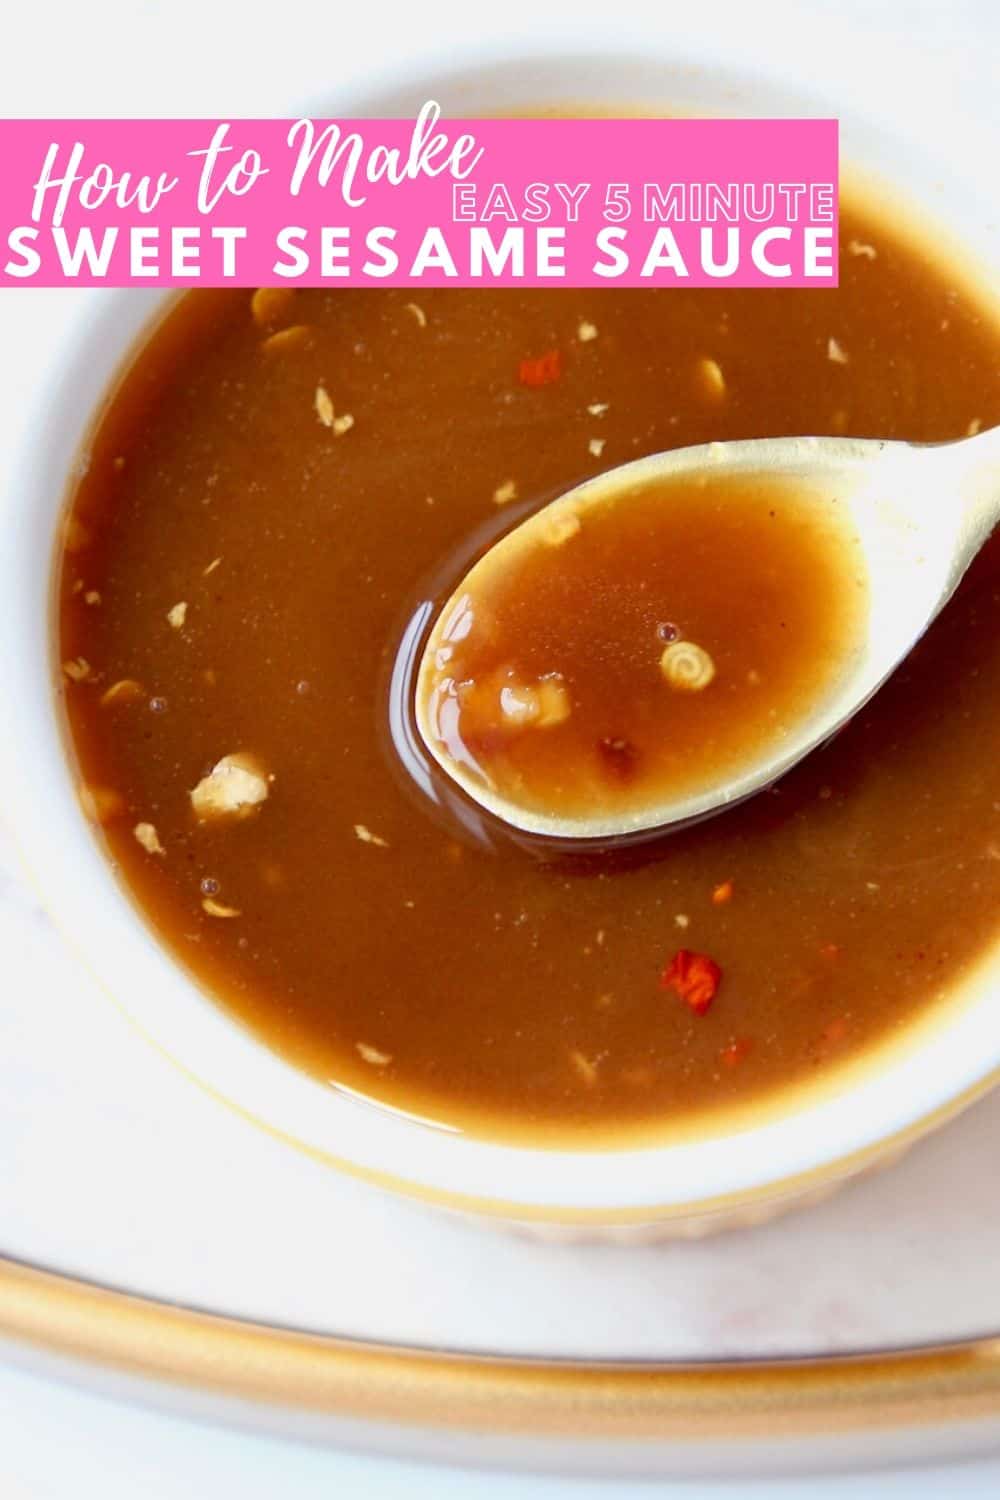 Sweet Sesame Sauce 5 